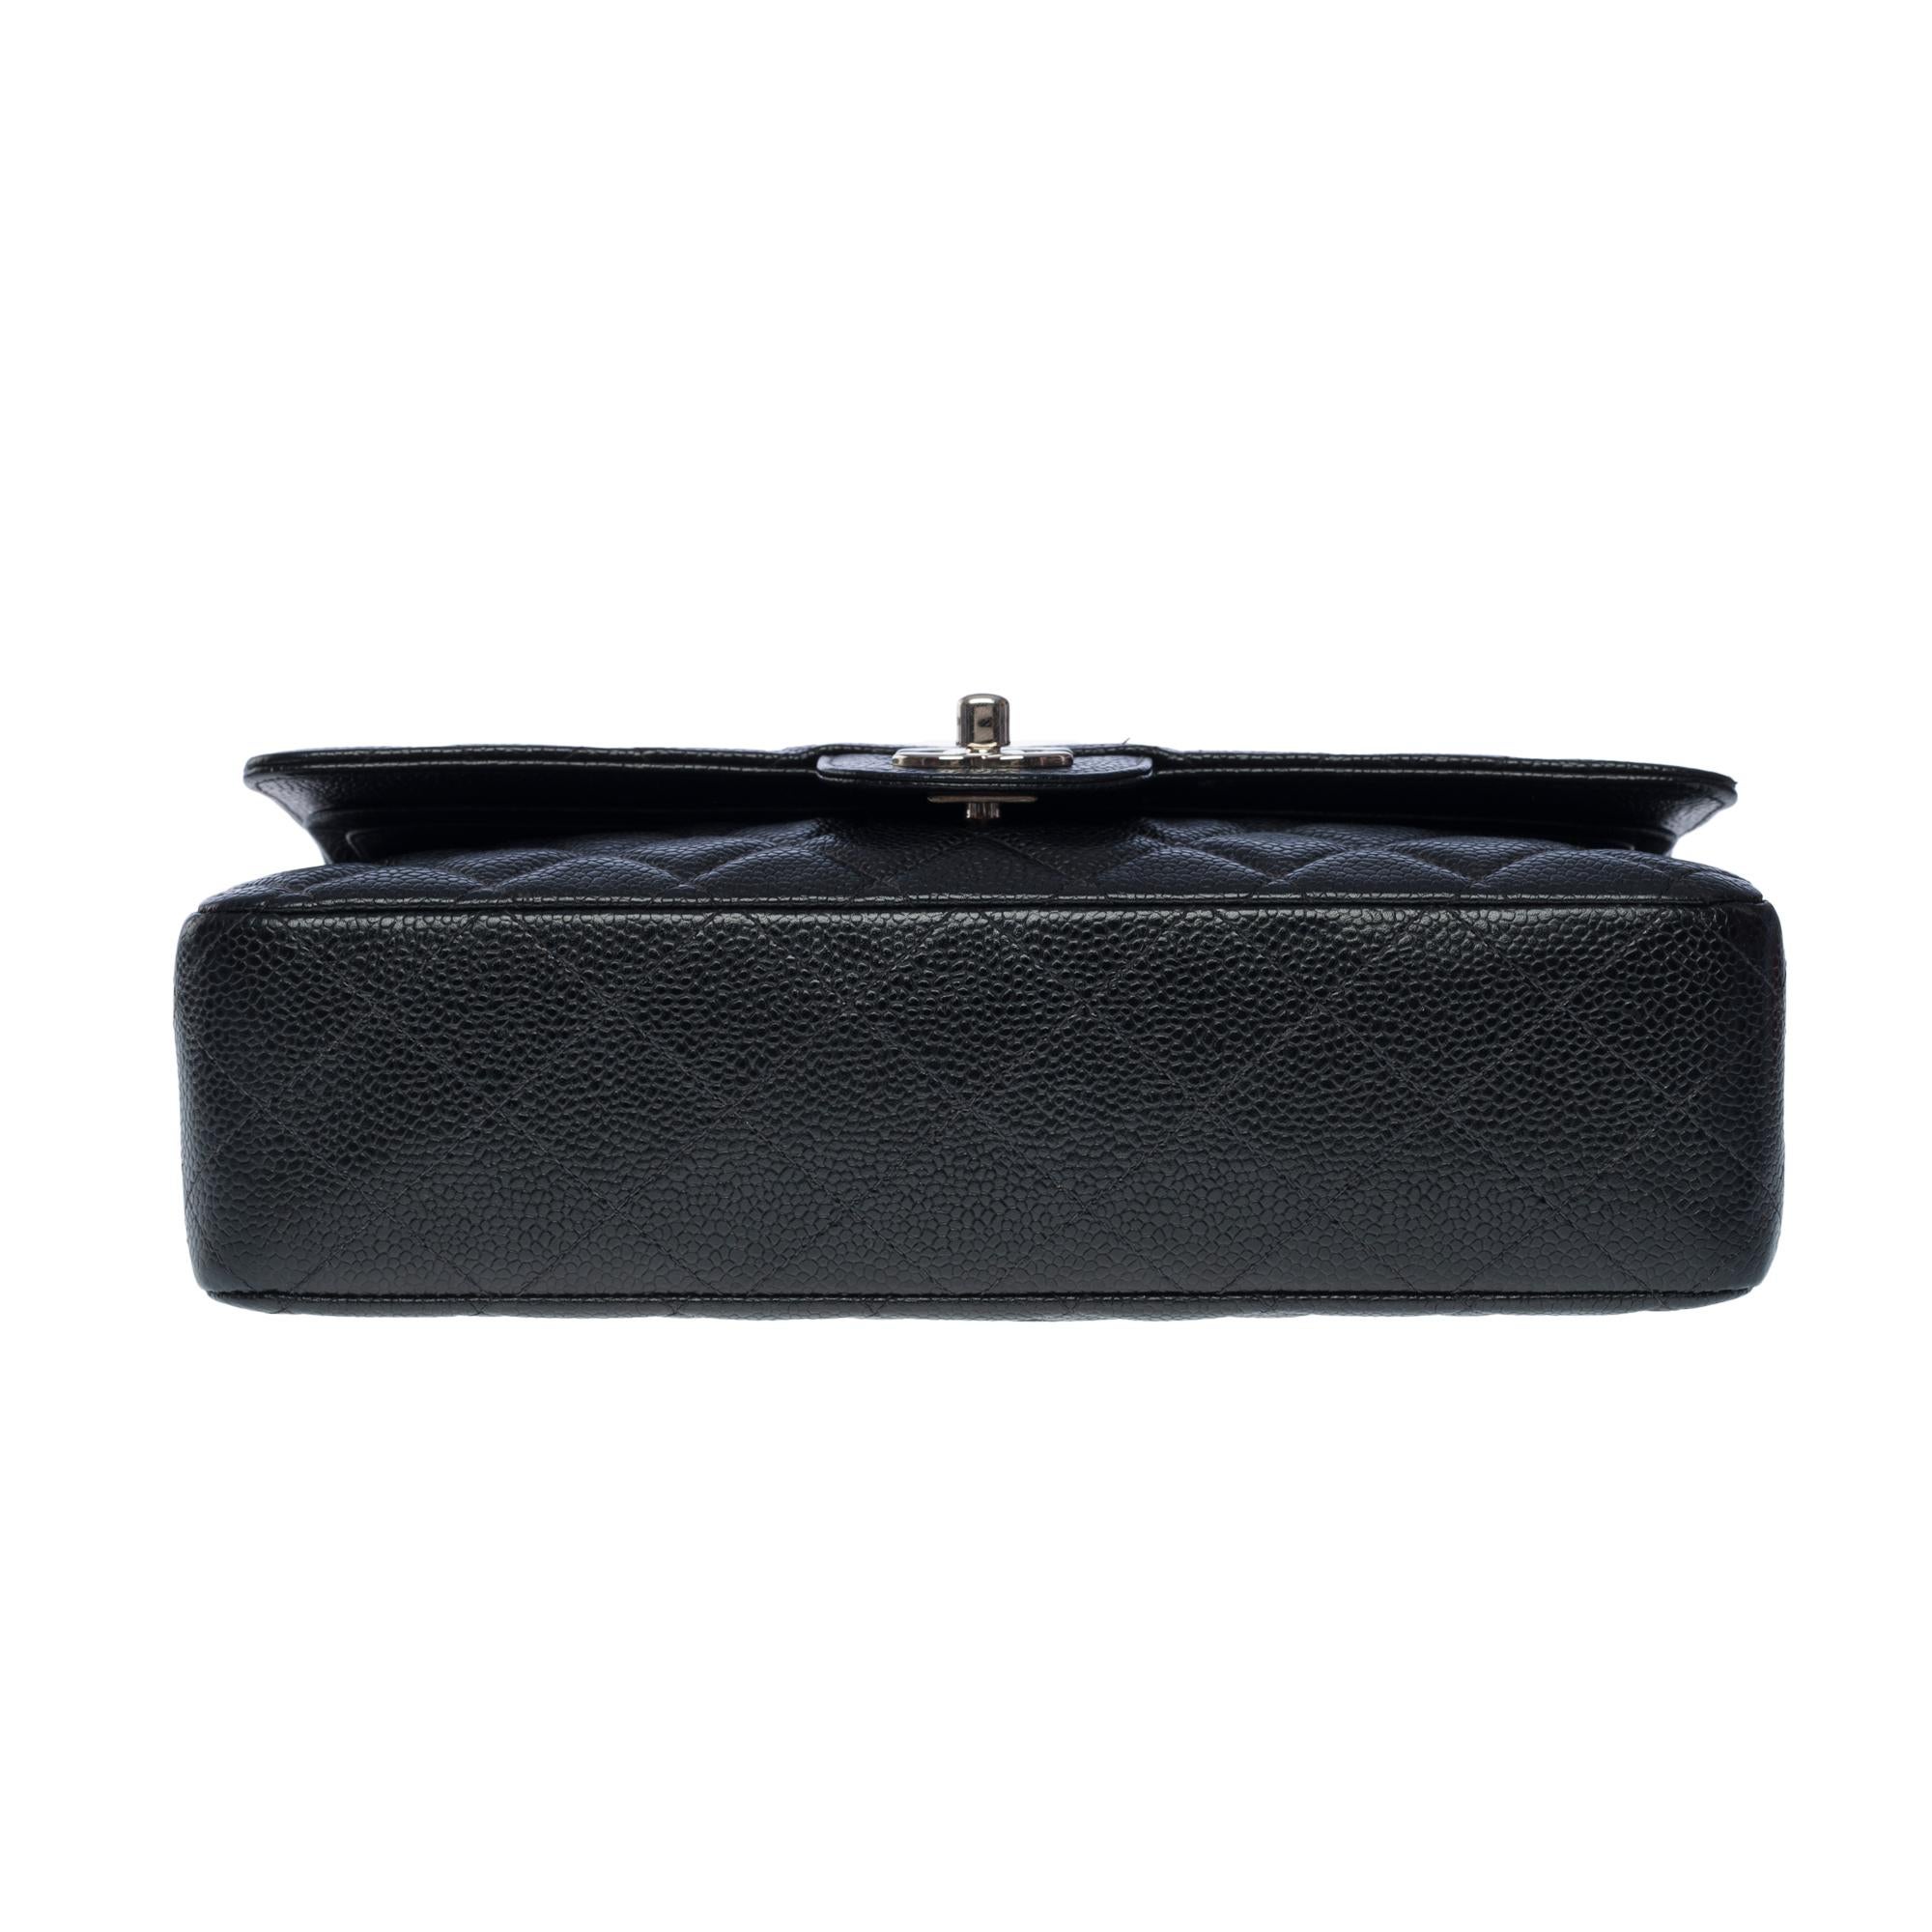 Chanel Timeless Medium 25cm double flap shoulder bag in black caviar leather, SHW 3